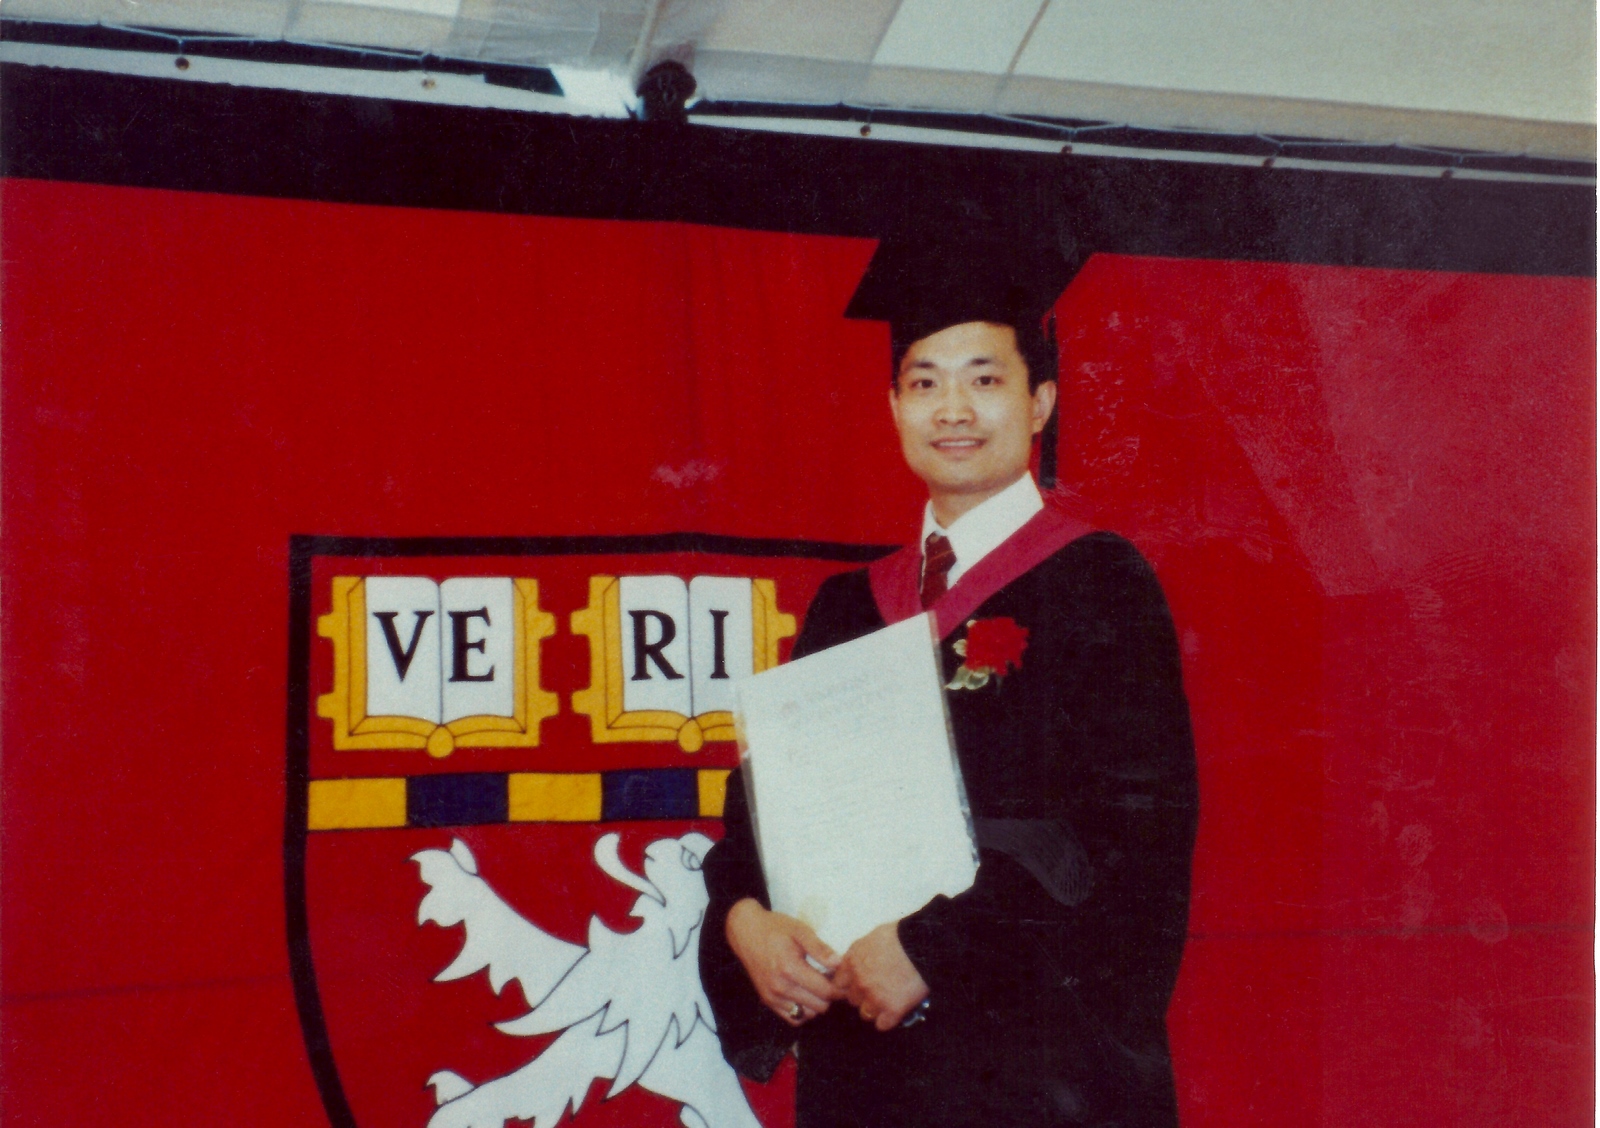 Graduating with MD degree (magna cum laude) from Harvard & MIT